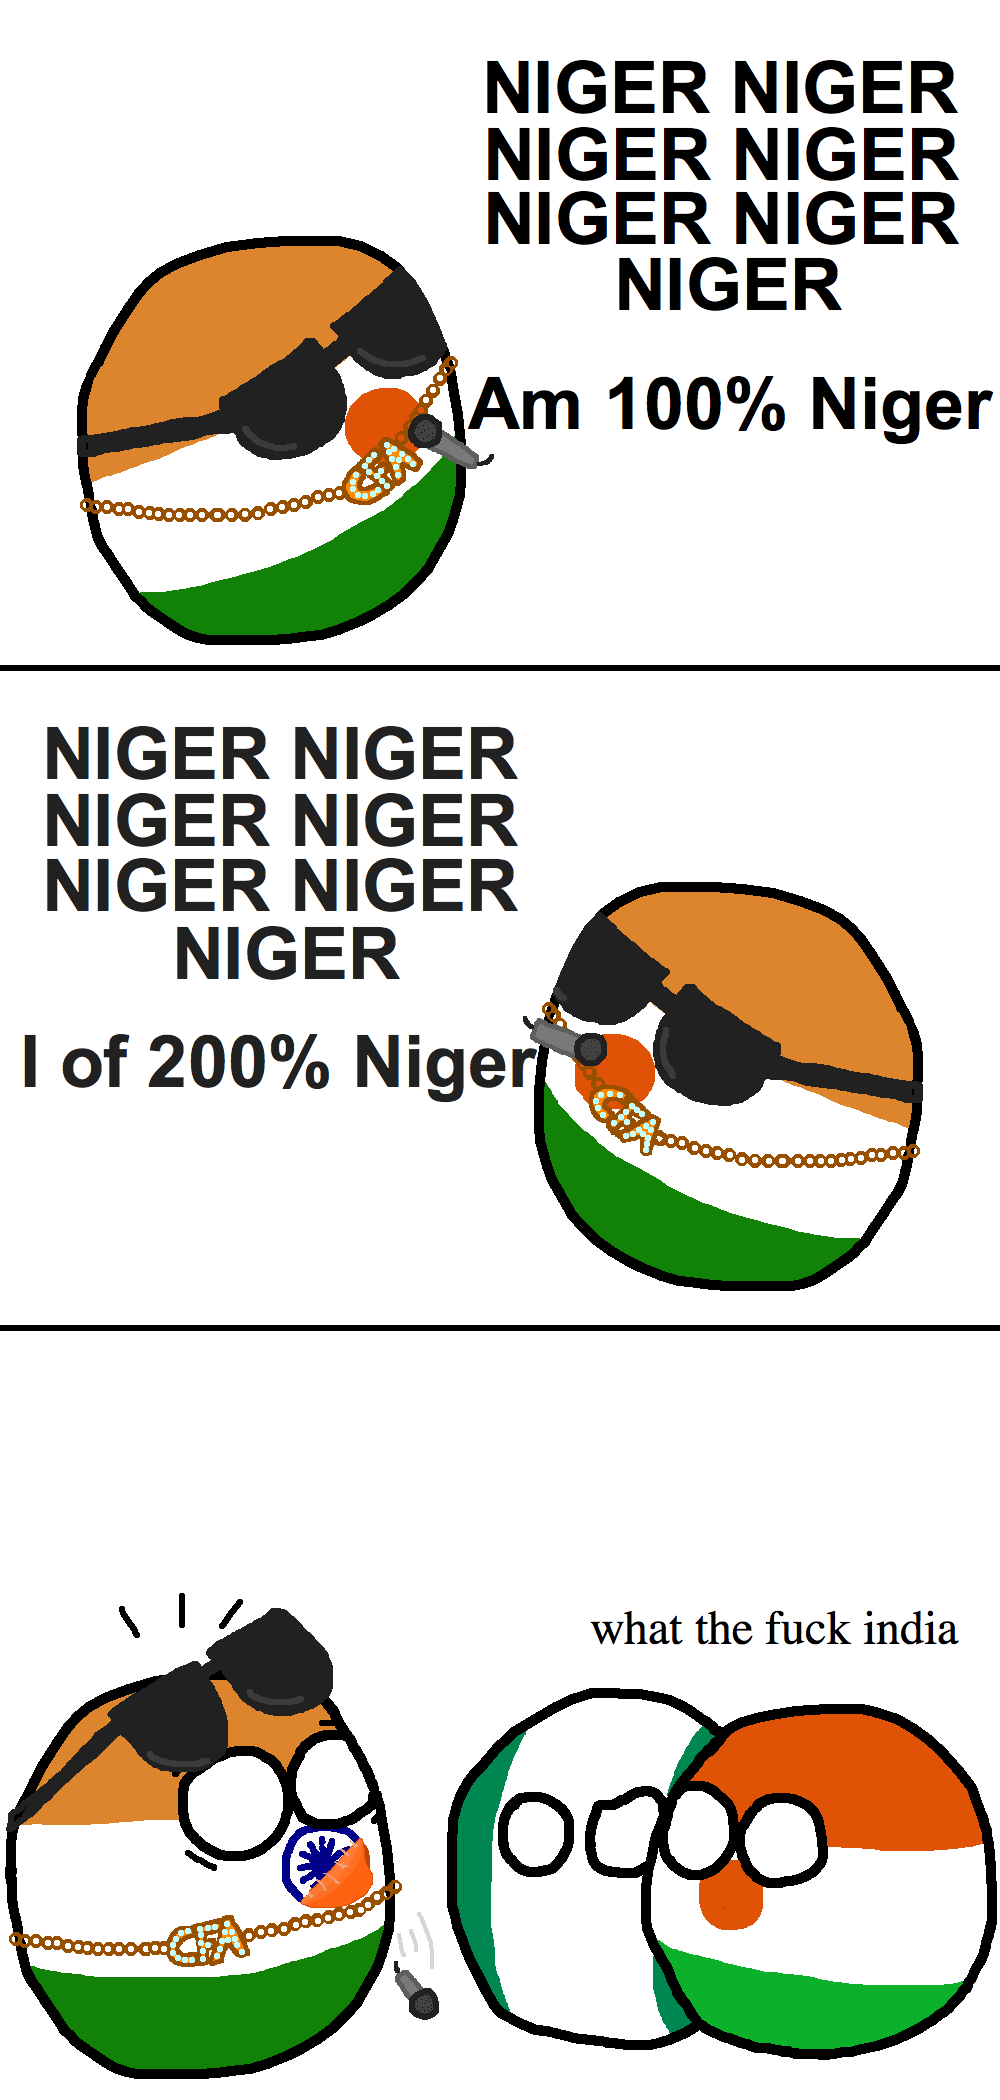 Black slut called nigger racial names image